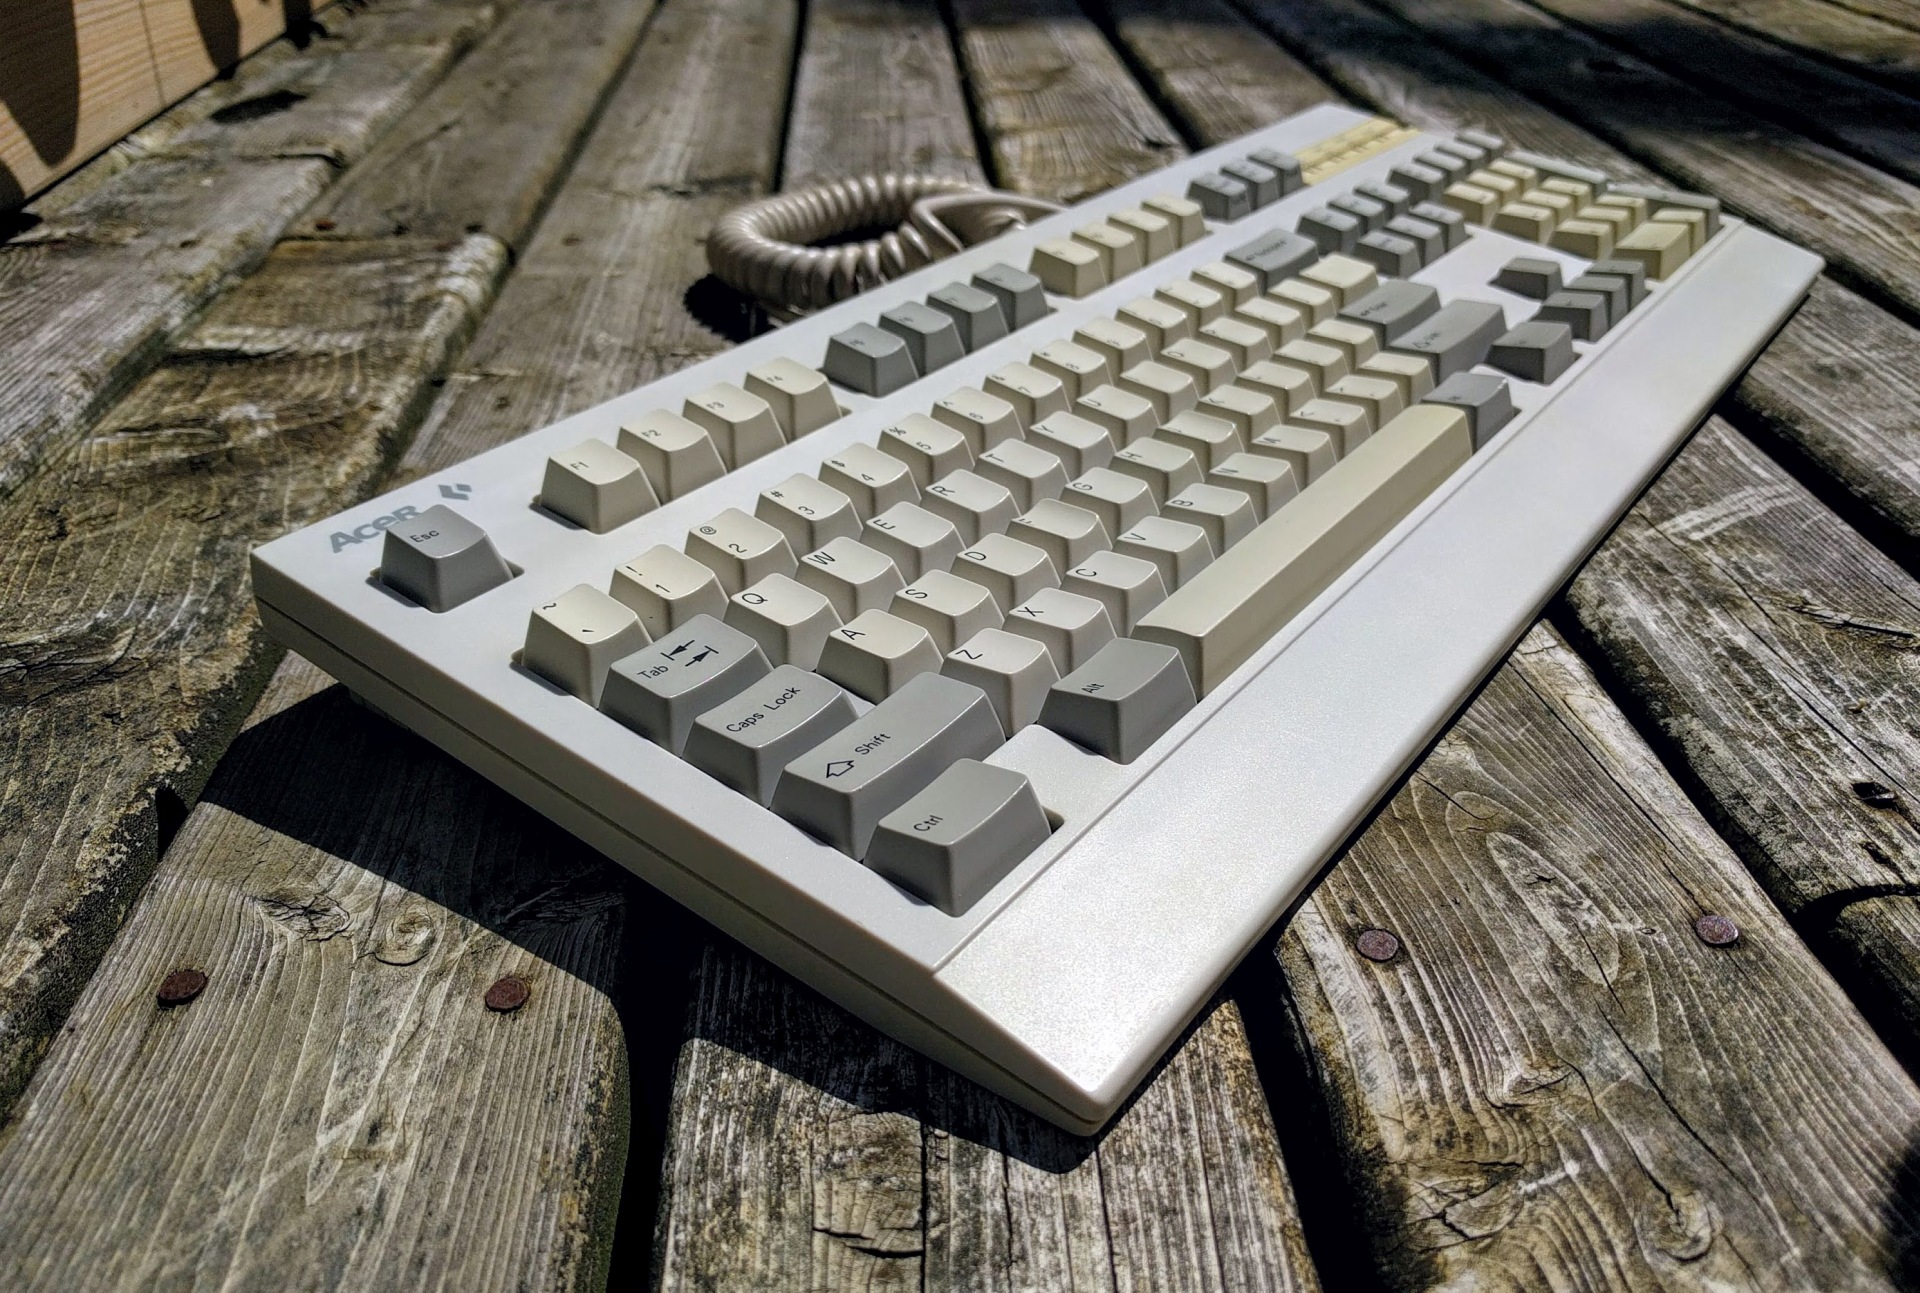 Acer 6011 keyboard